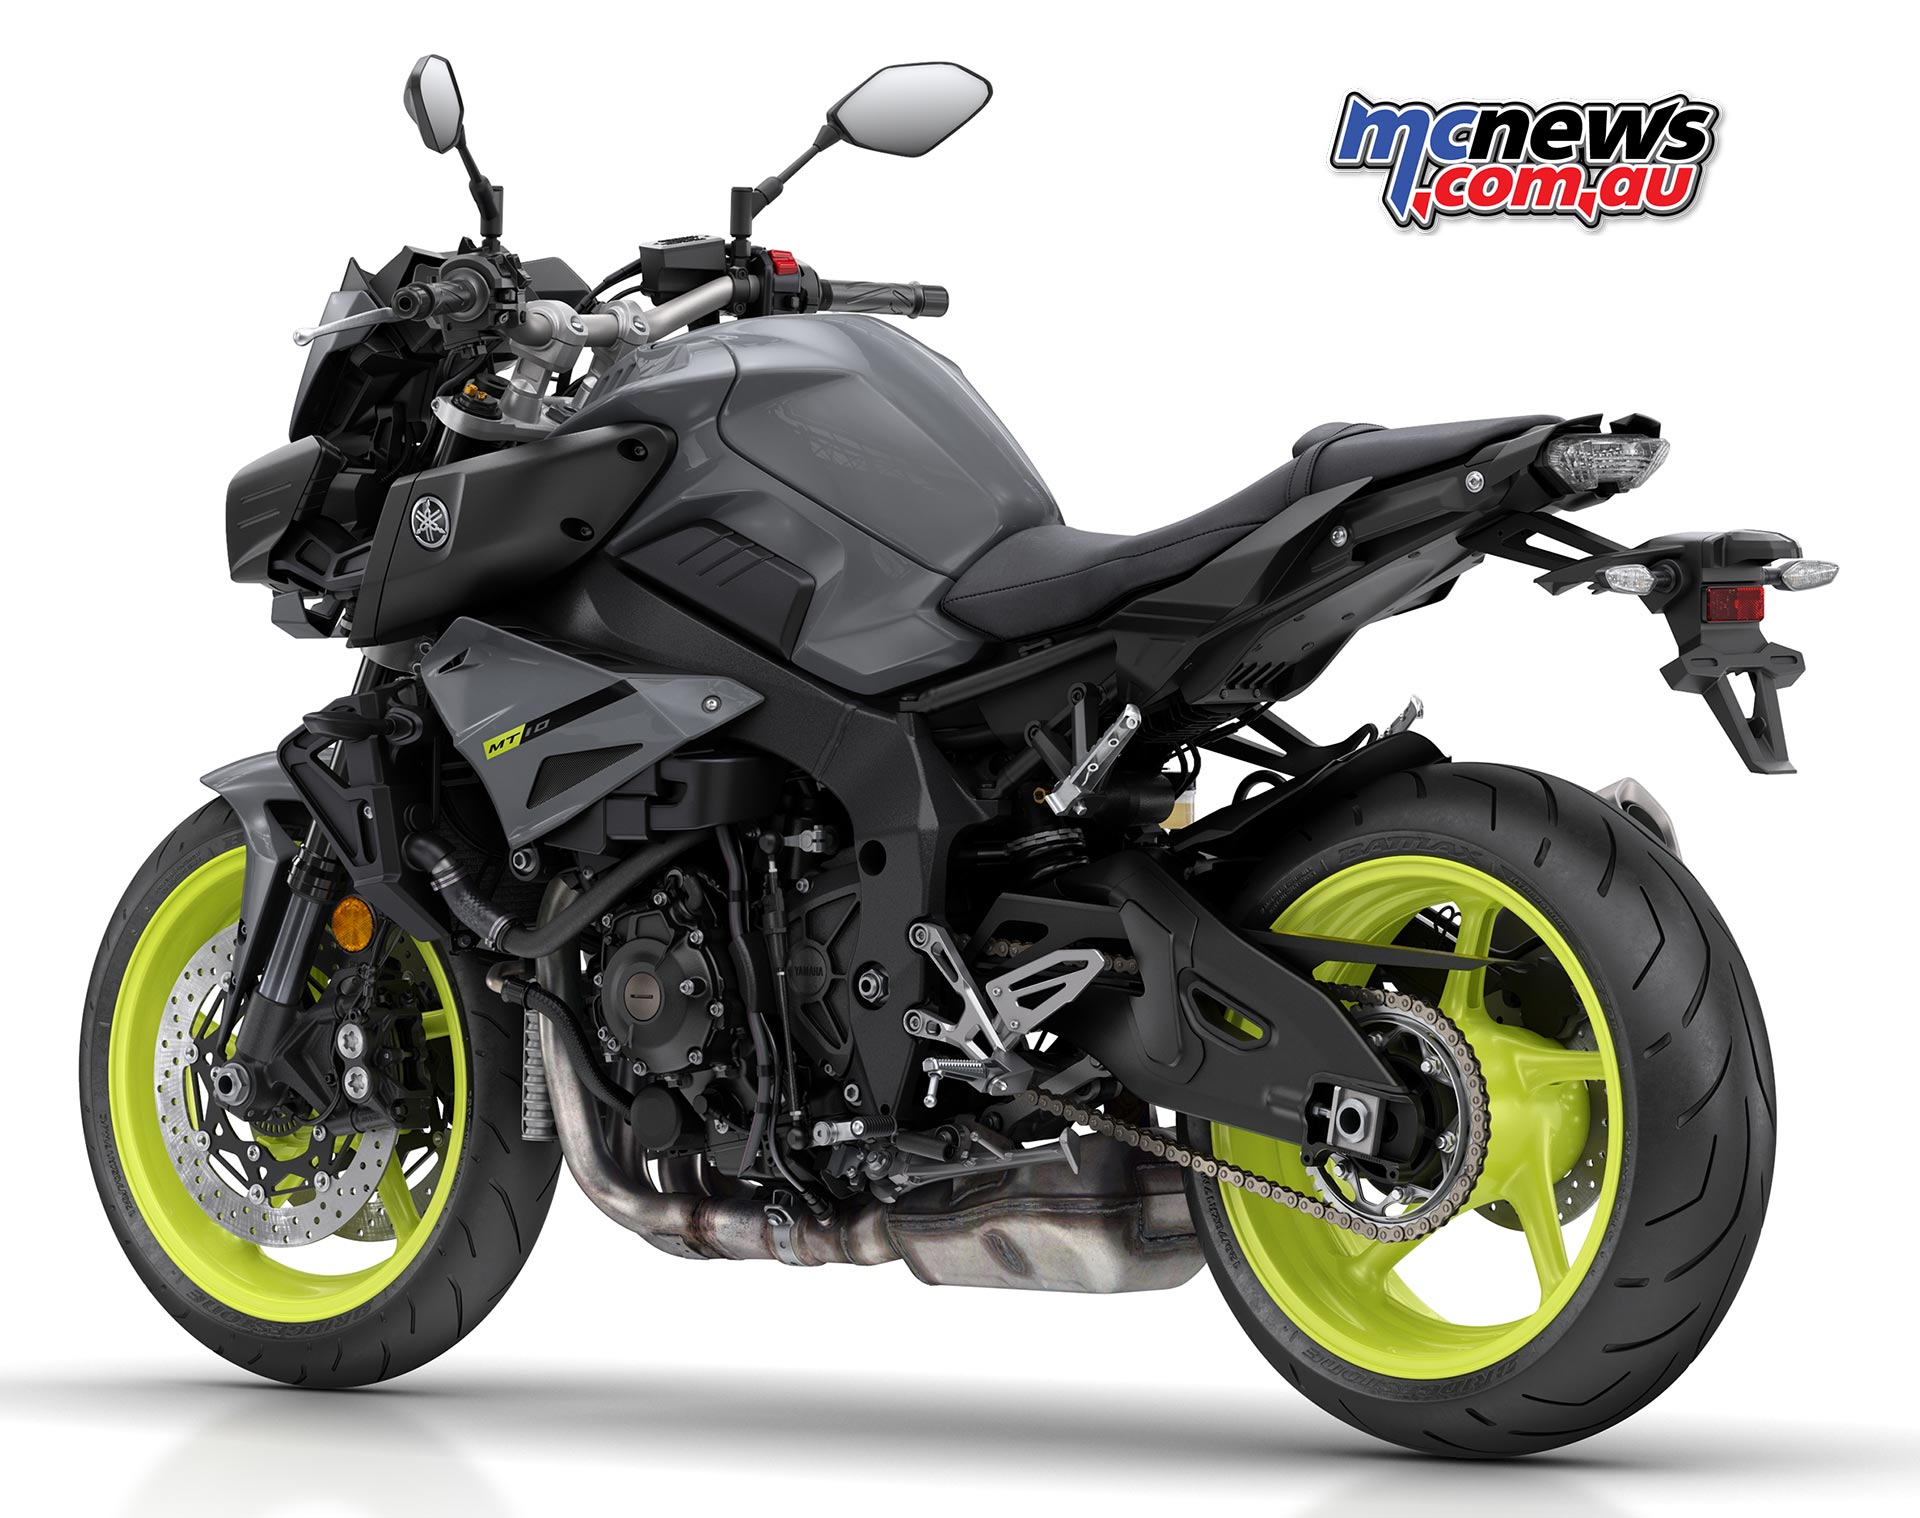 Yamaha MT-10 SP gets YZF-R1M supersport tech | MCNews.com.au